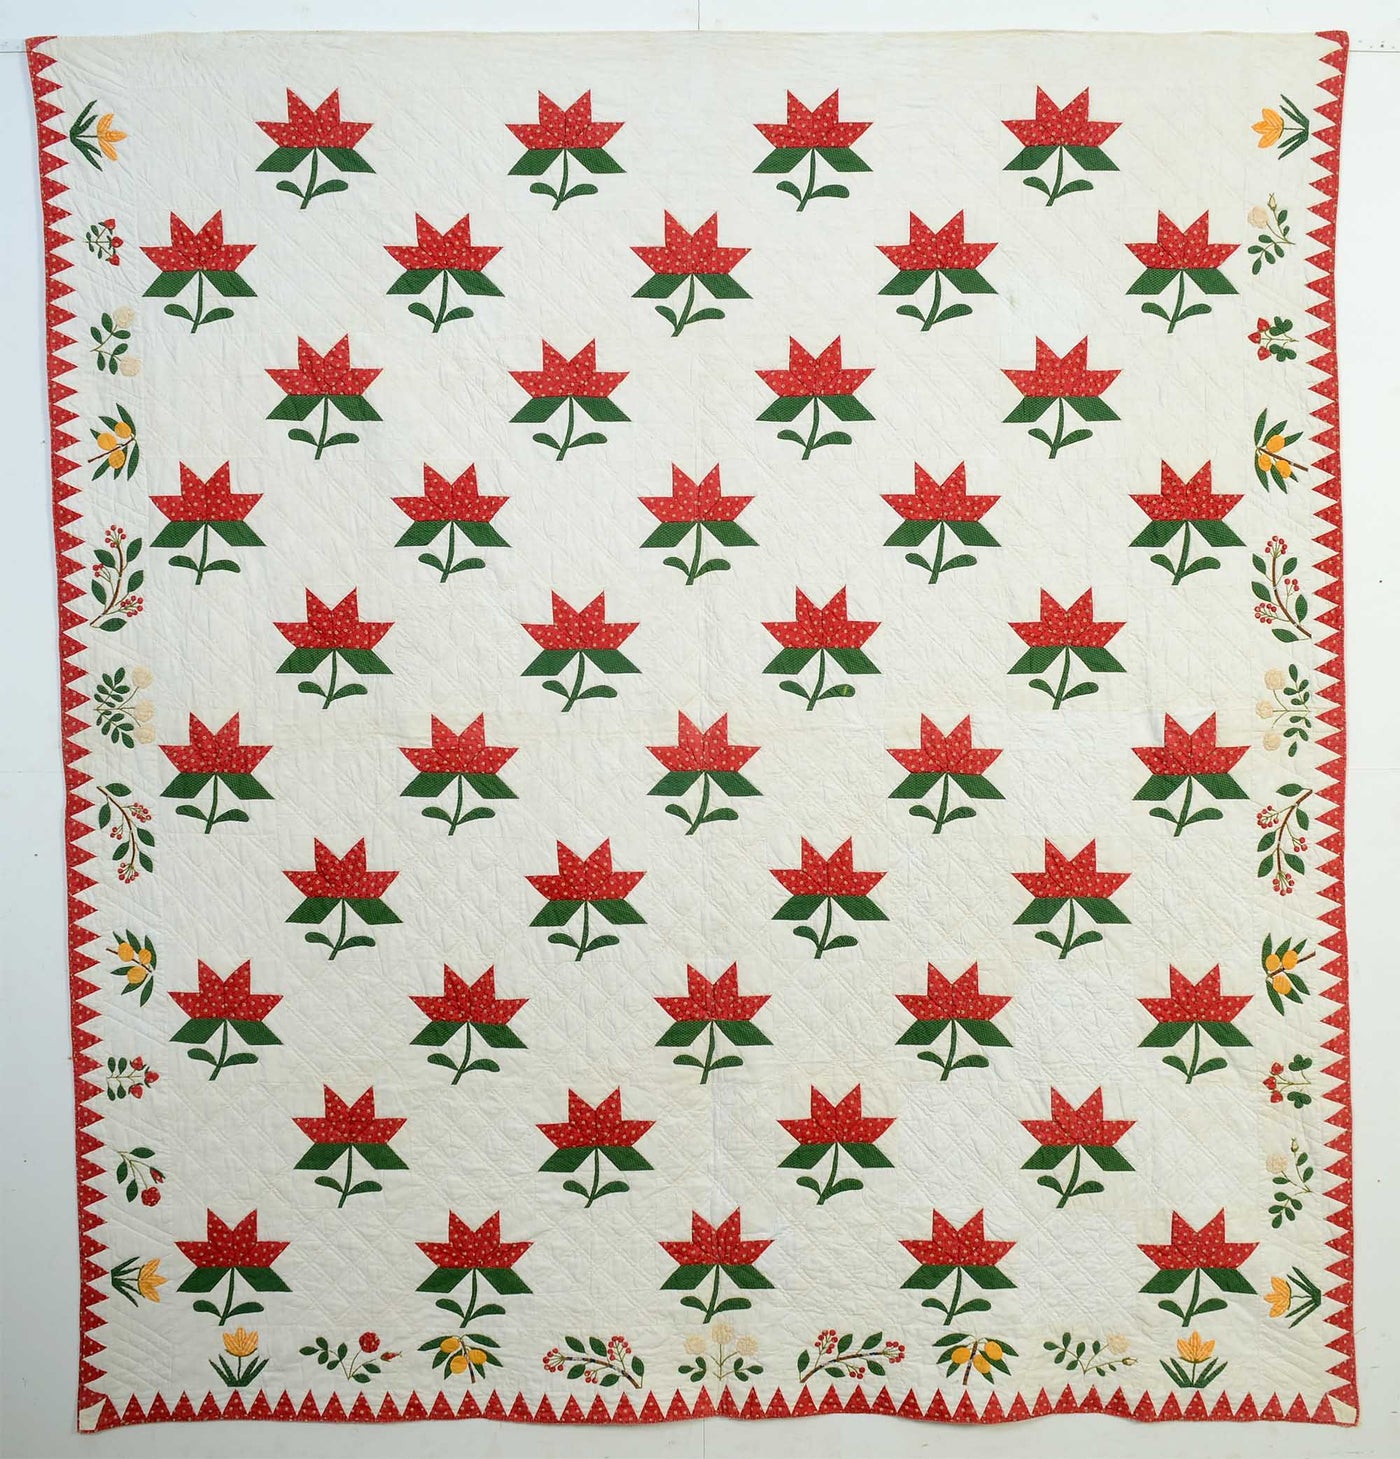 maple-leaf-quilt-with-botanical-border-1410995